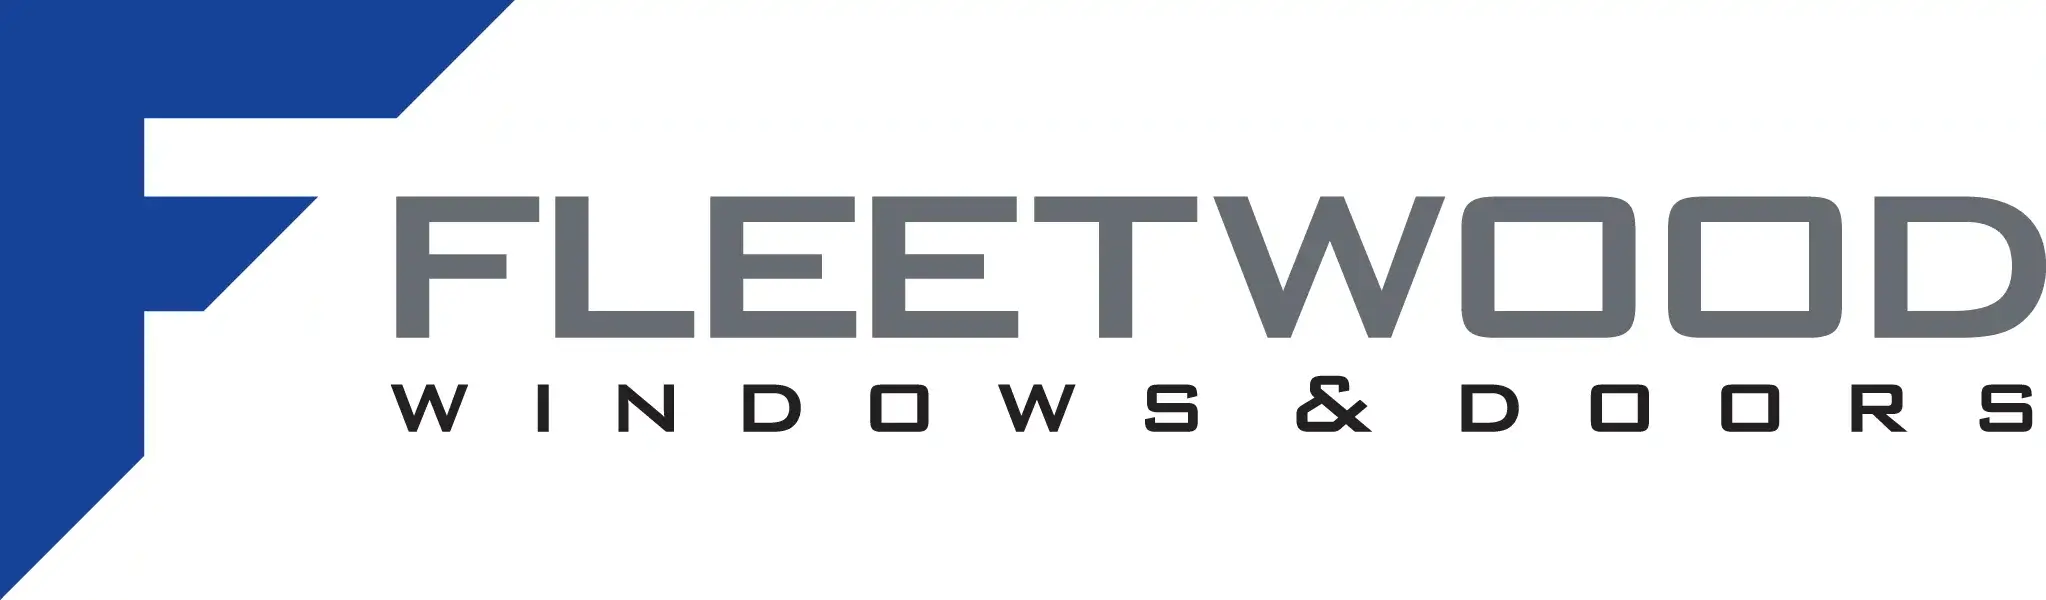 Fleetwood logo